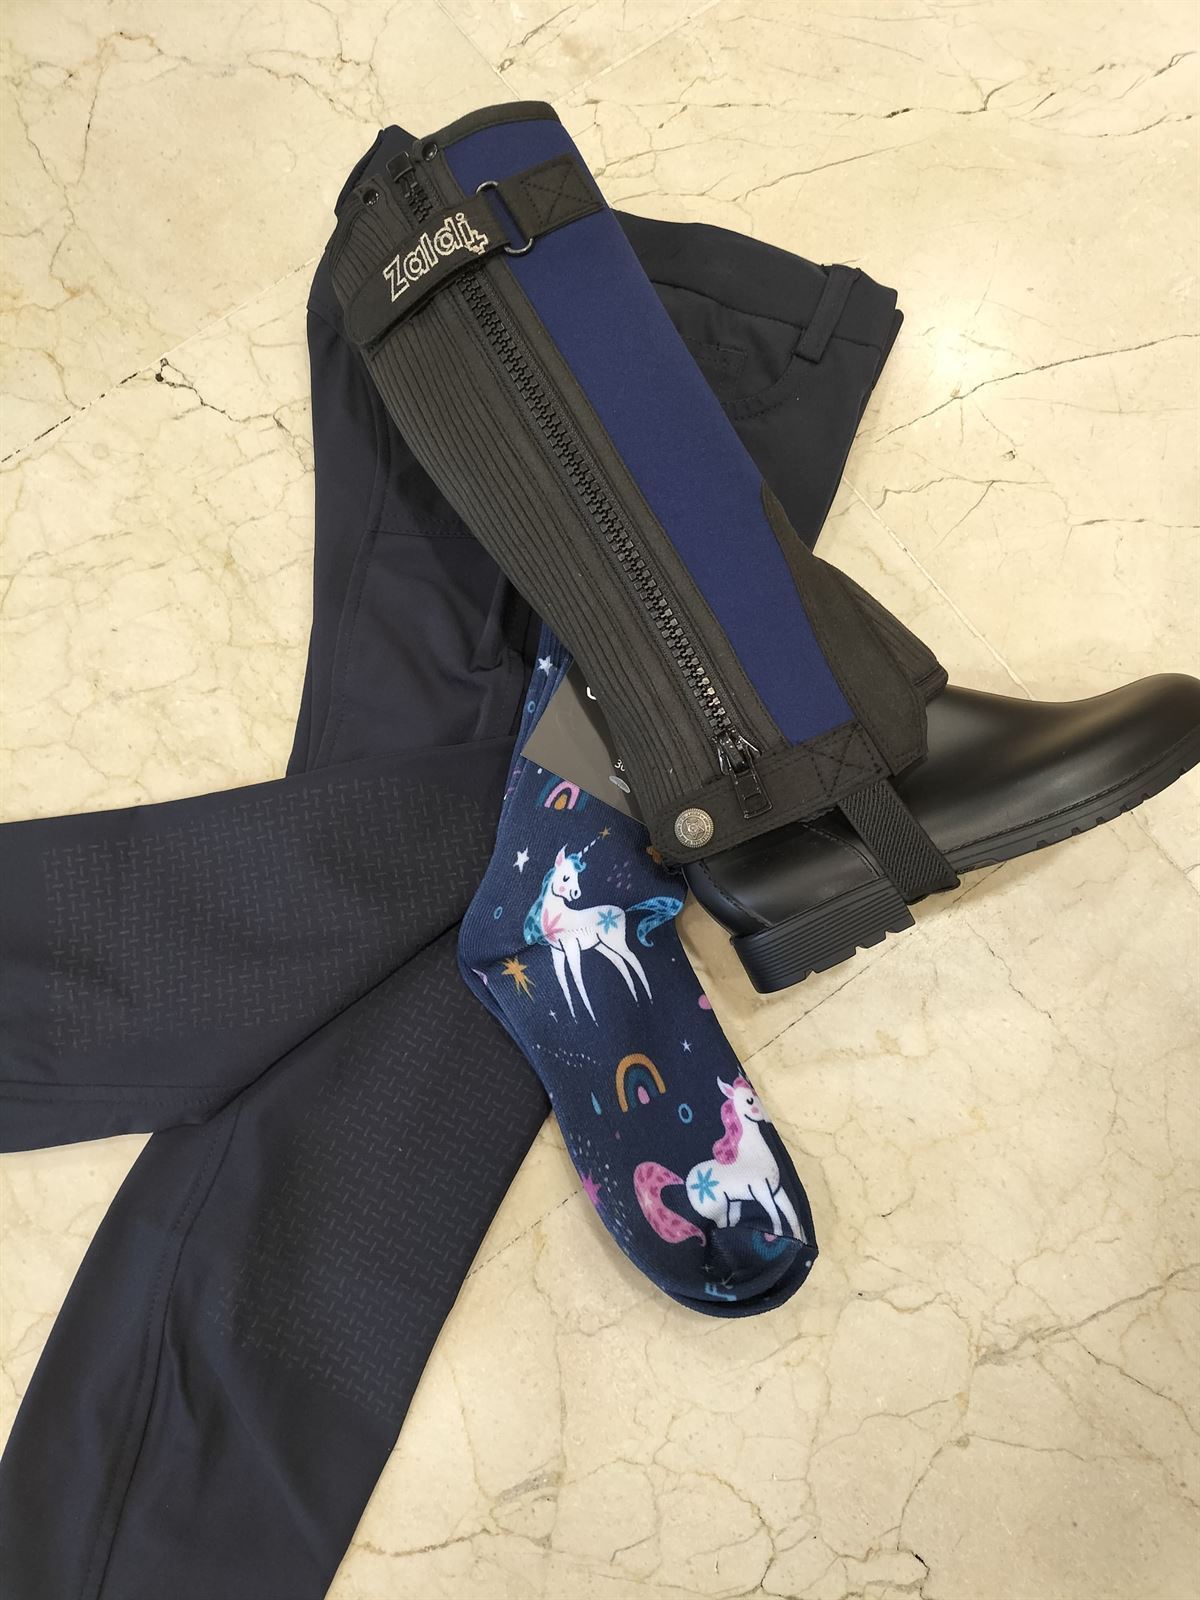 Pantalón unisex HKM Sports Equipment Sunshine color azul marino, rodilla silicona, tallaje infantil - Imagen 5